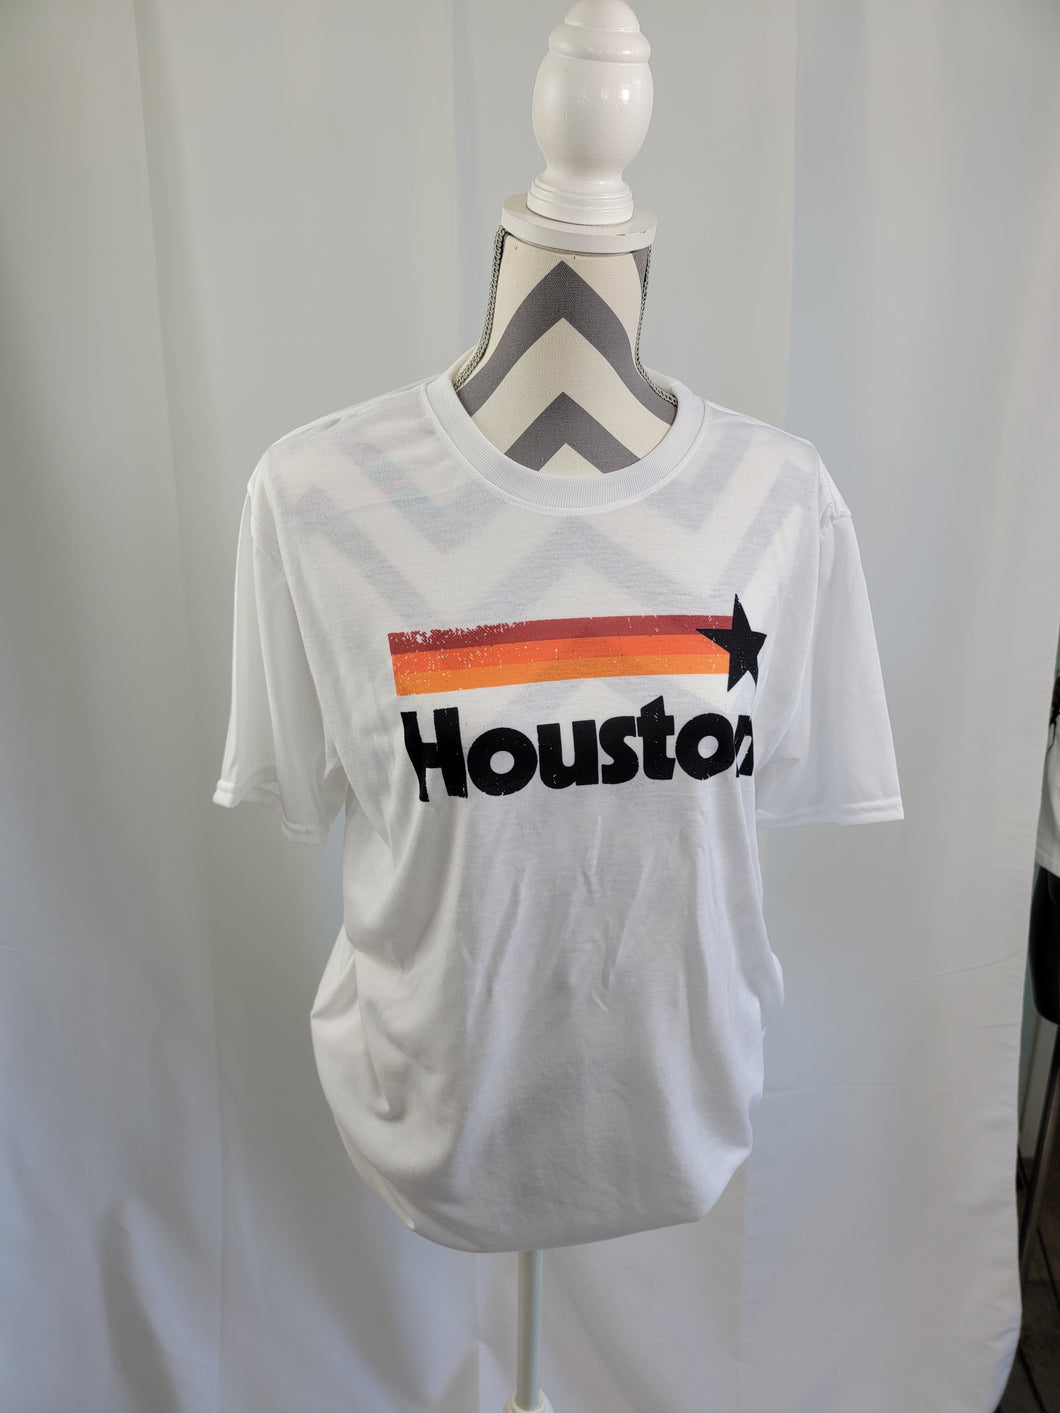 Vintage Houston t-shirt